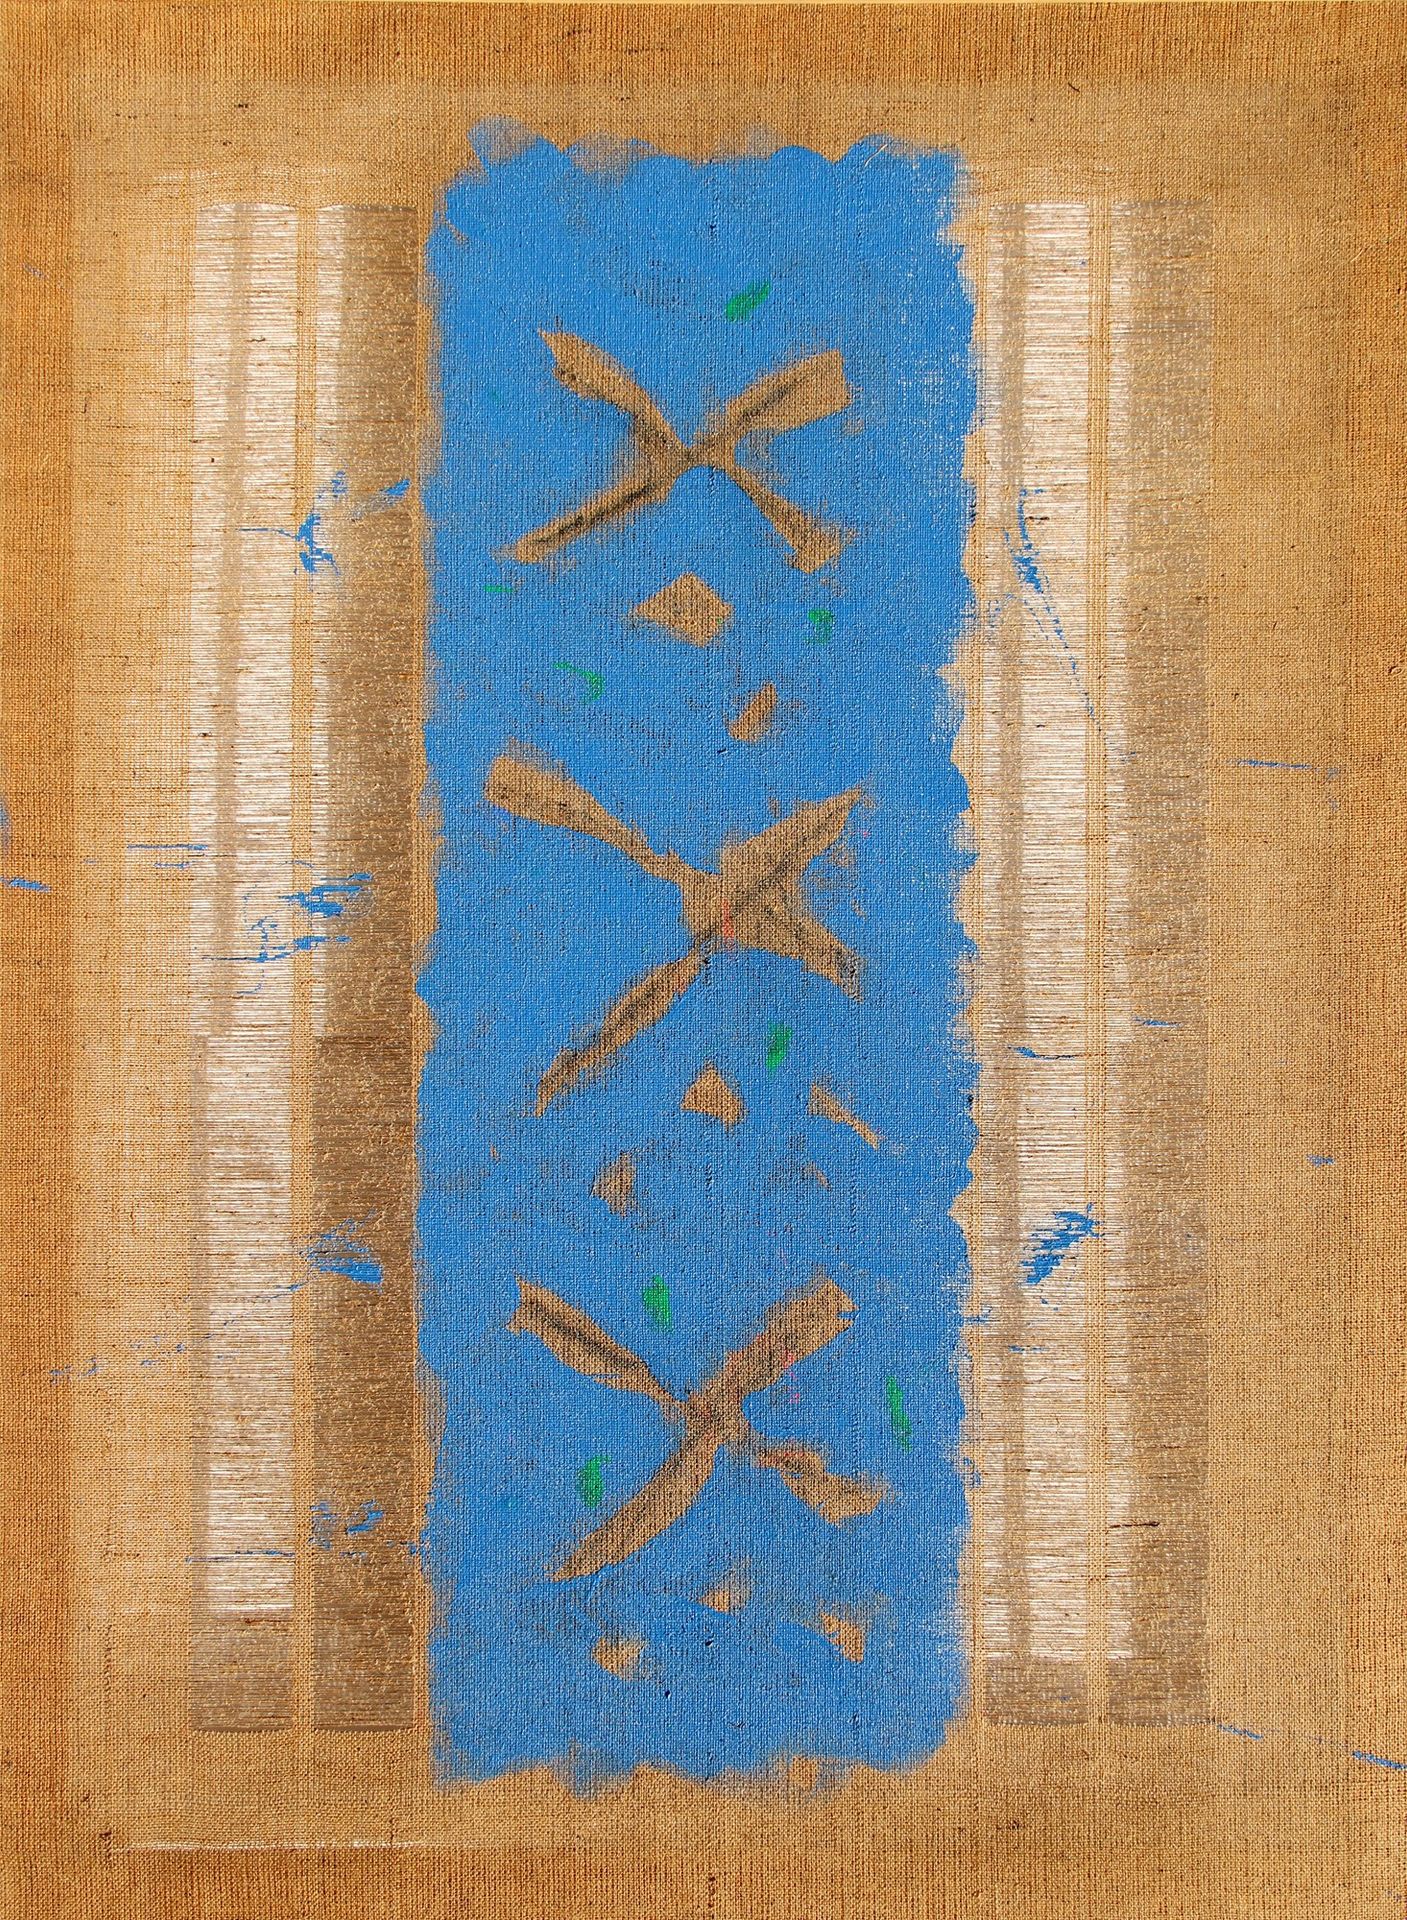 Salvatore EMBLEMA Untitled 2004年，黄麻上的彩色泥土，厘米，200x150

由艺术家签发的证书，编号为。DG 326